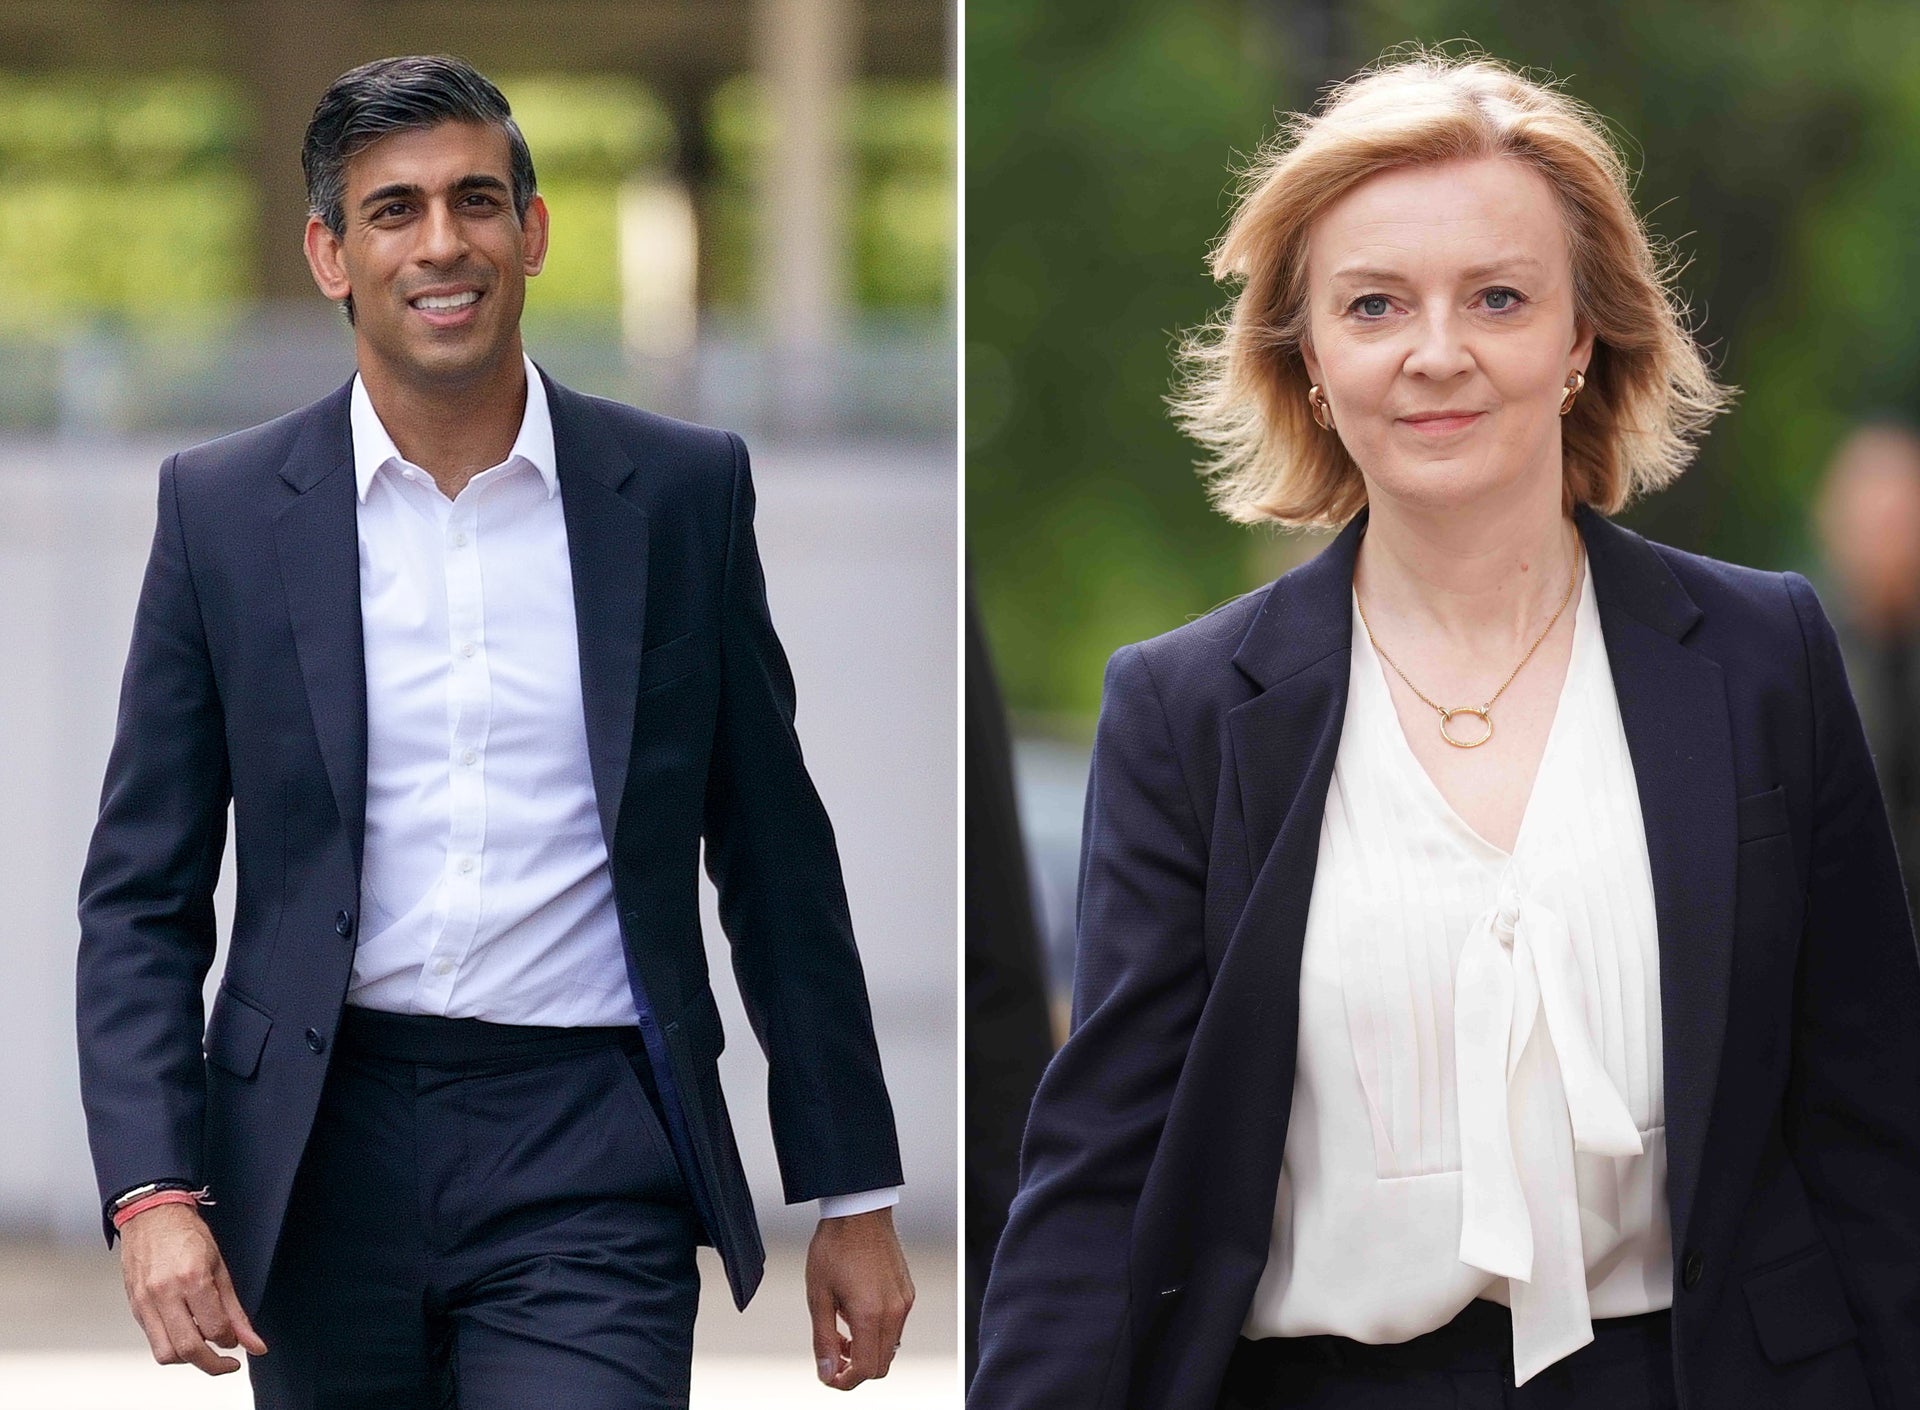 Rishi Sunak and Liz Truss are vying to succeed Boris Johnson as PM